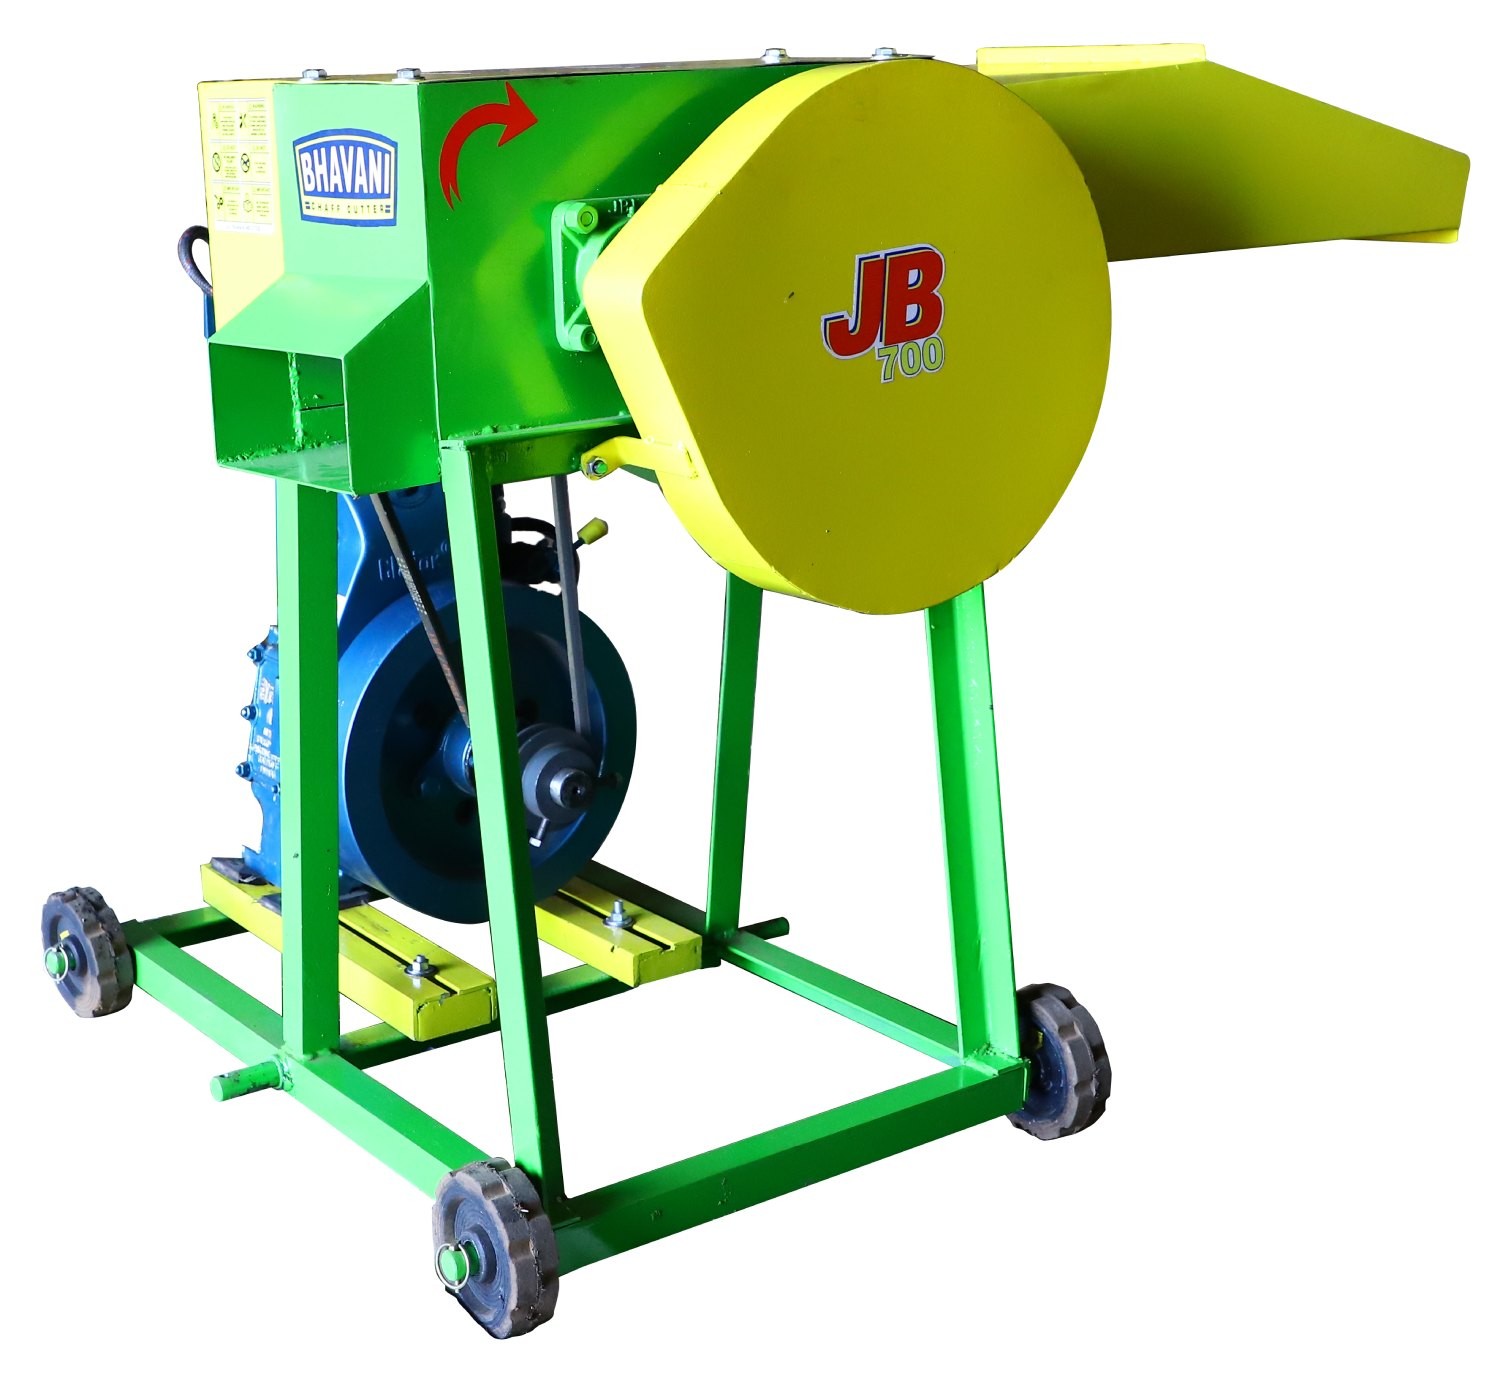 Diesel Engine JB-700 (2 HP Horizontal Chaff Cutter Machine) Without Motor